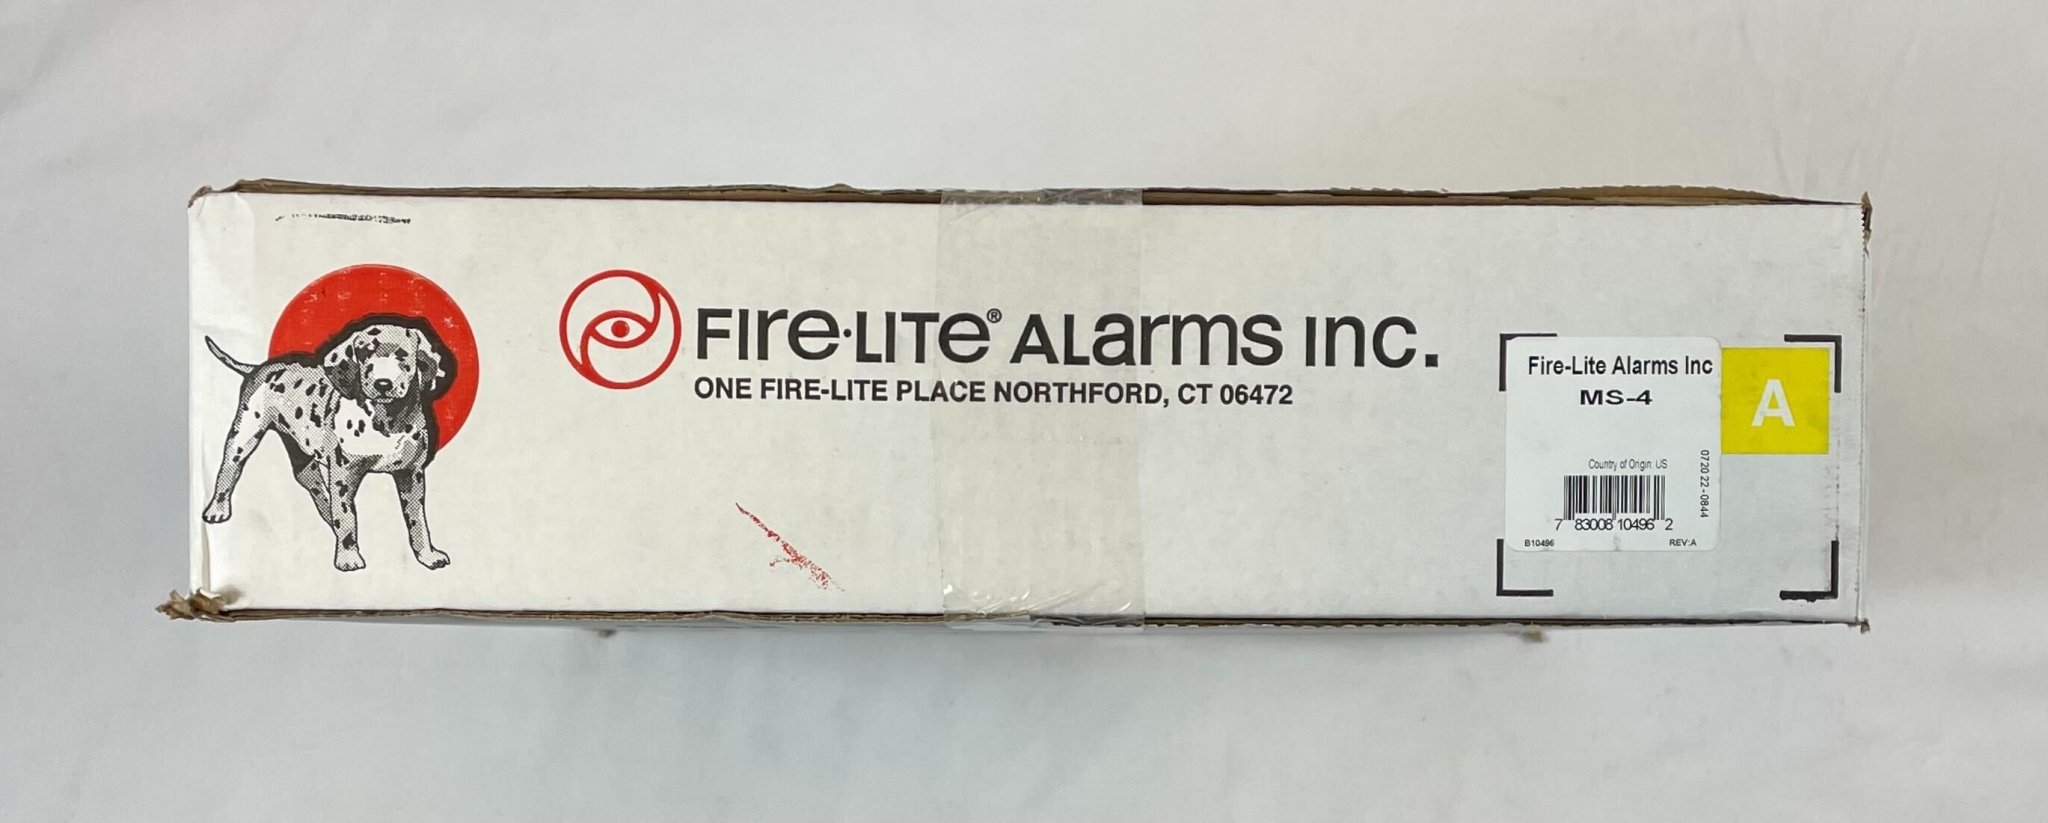 Firelite MS-4 - The Fire Alarm Supplier